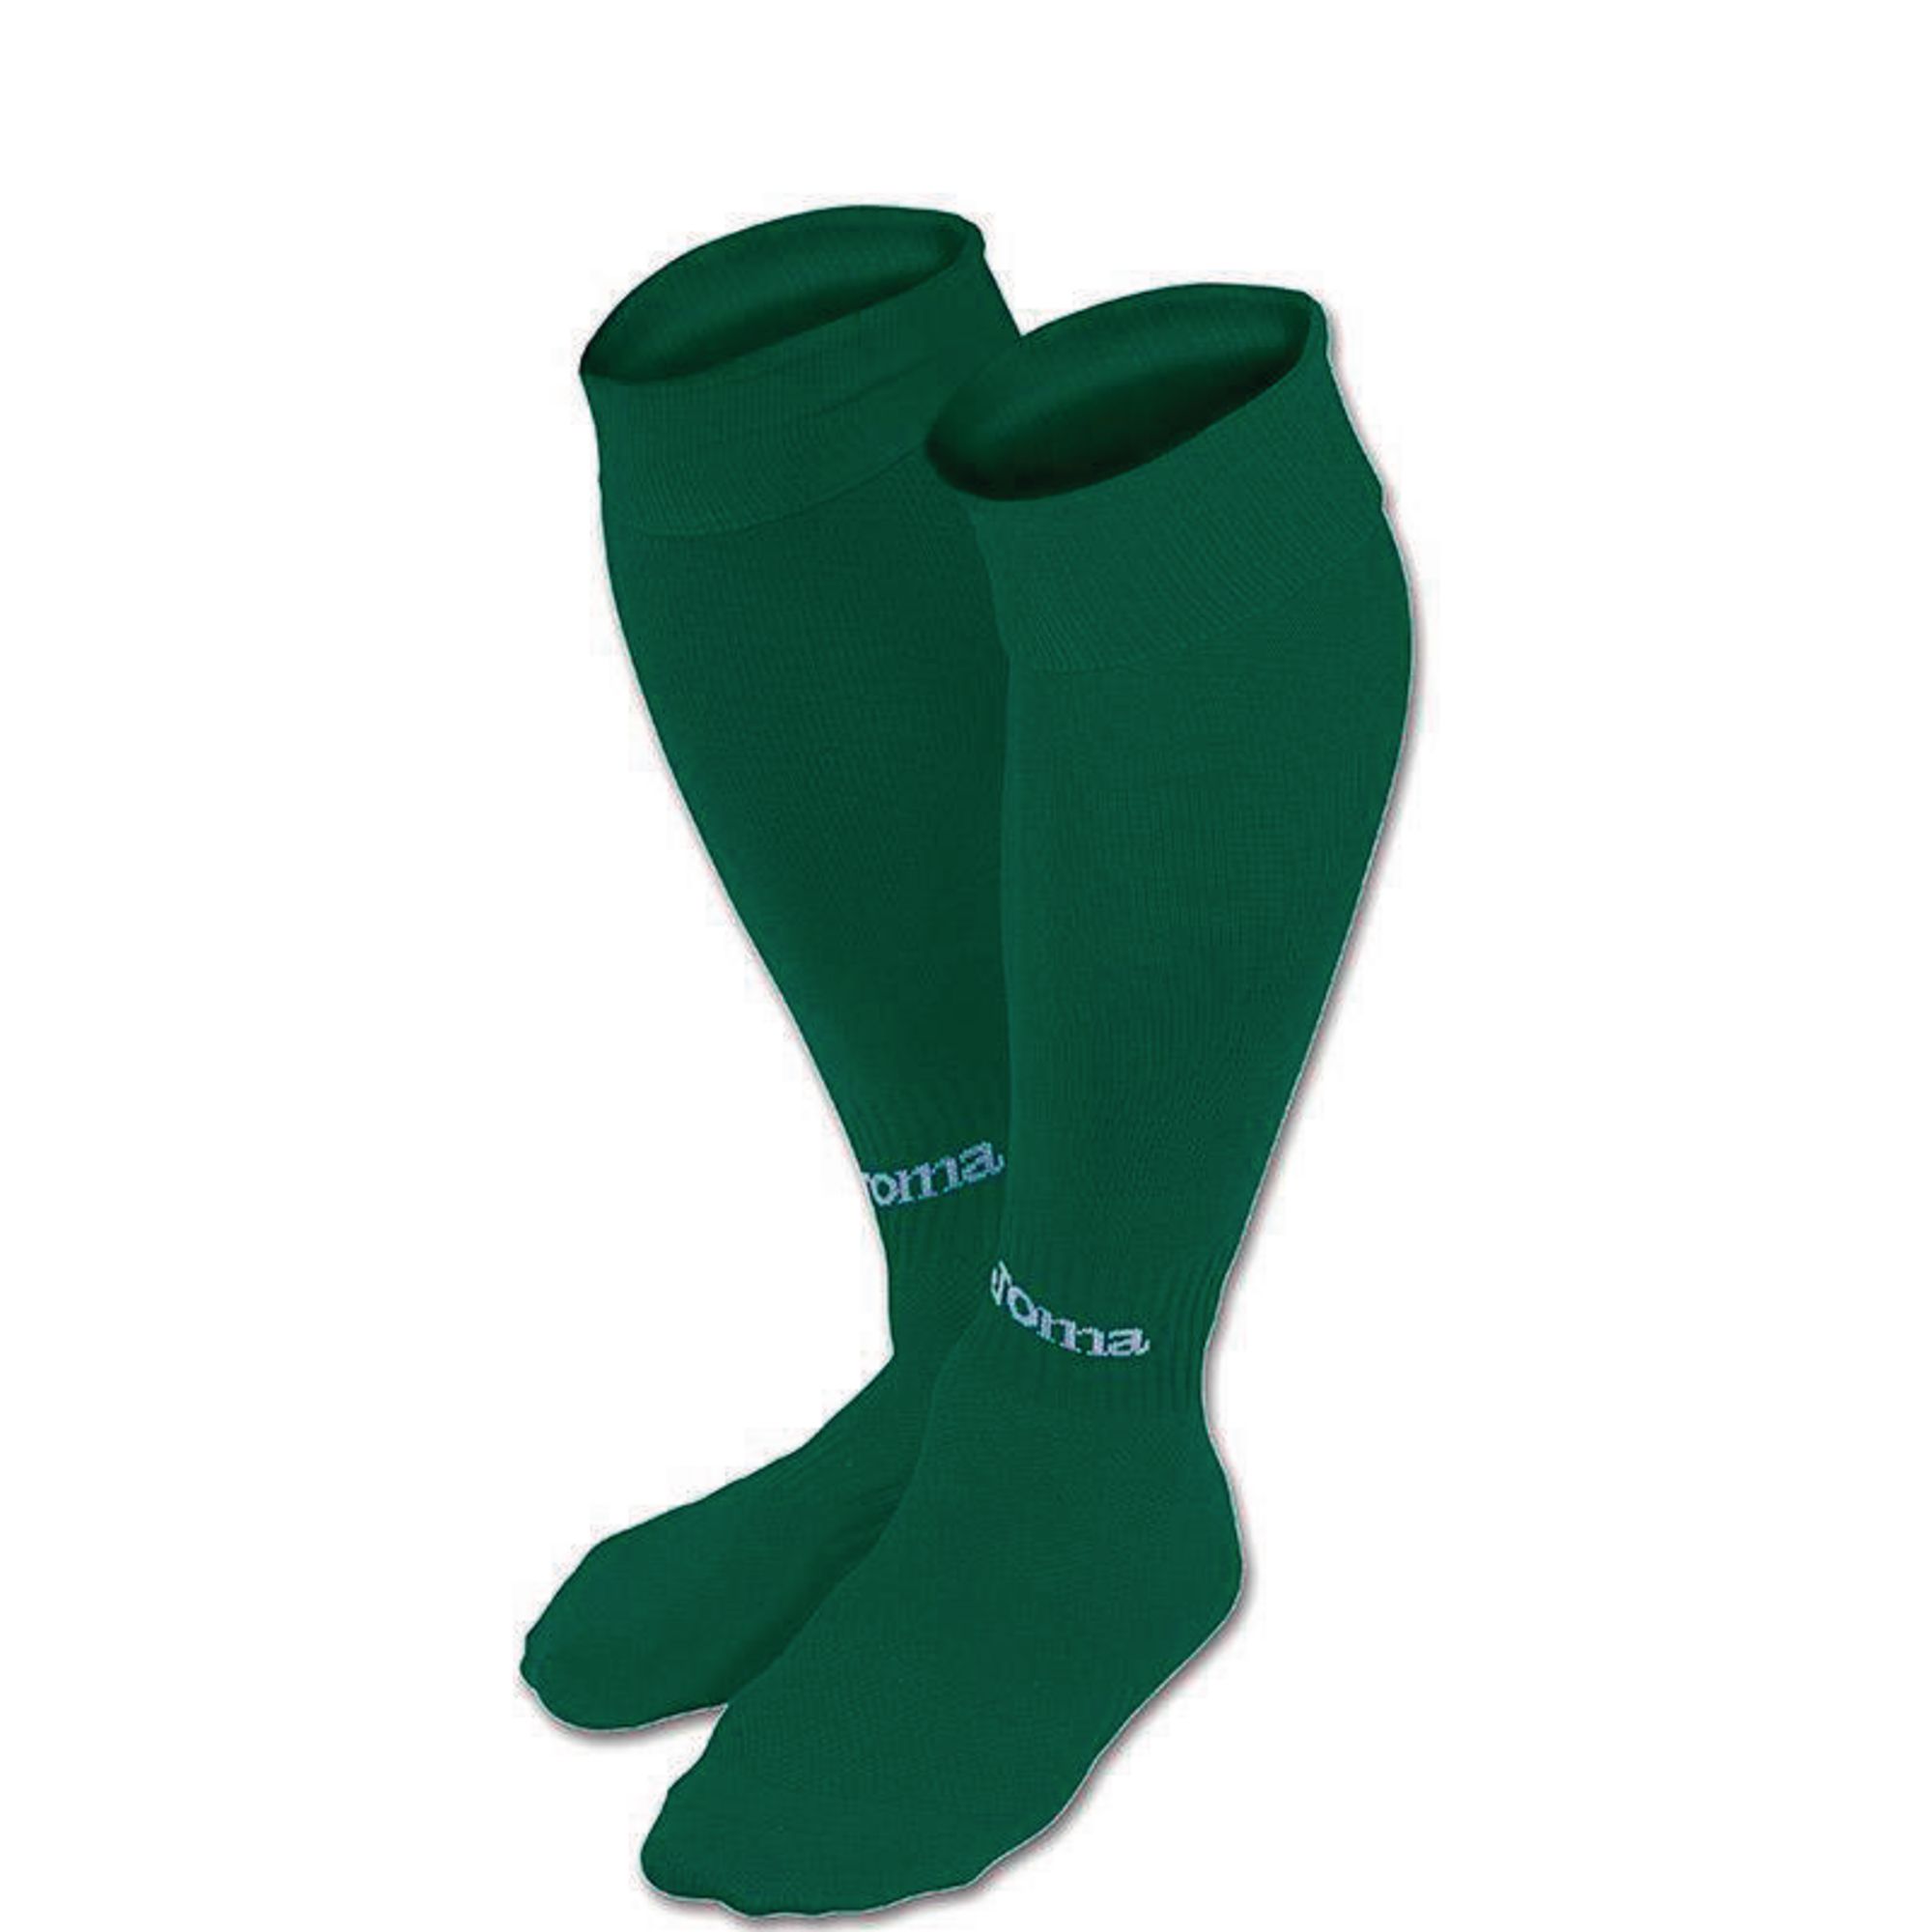 Joma Classic Socks Large 6-11 Vat Green